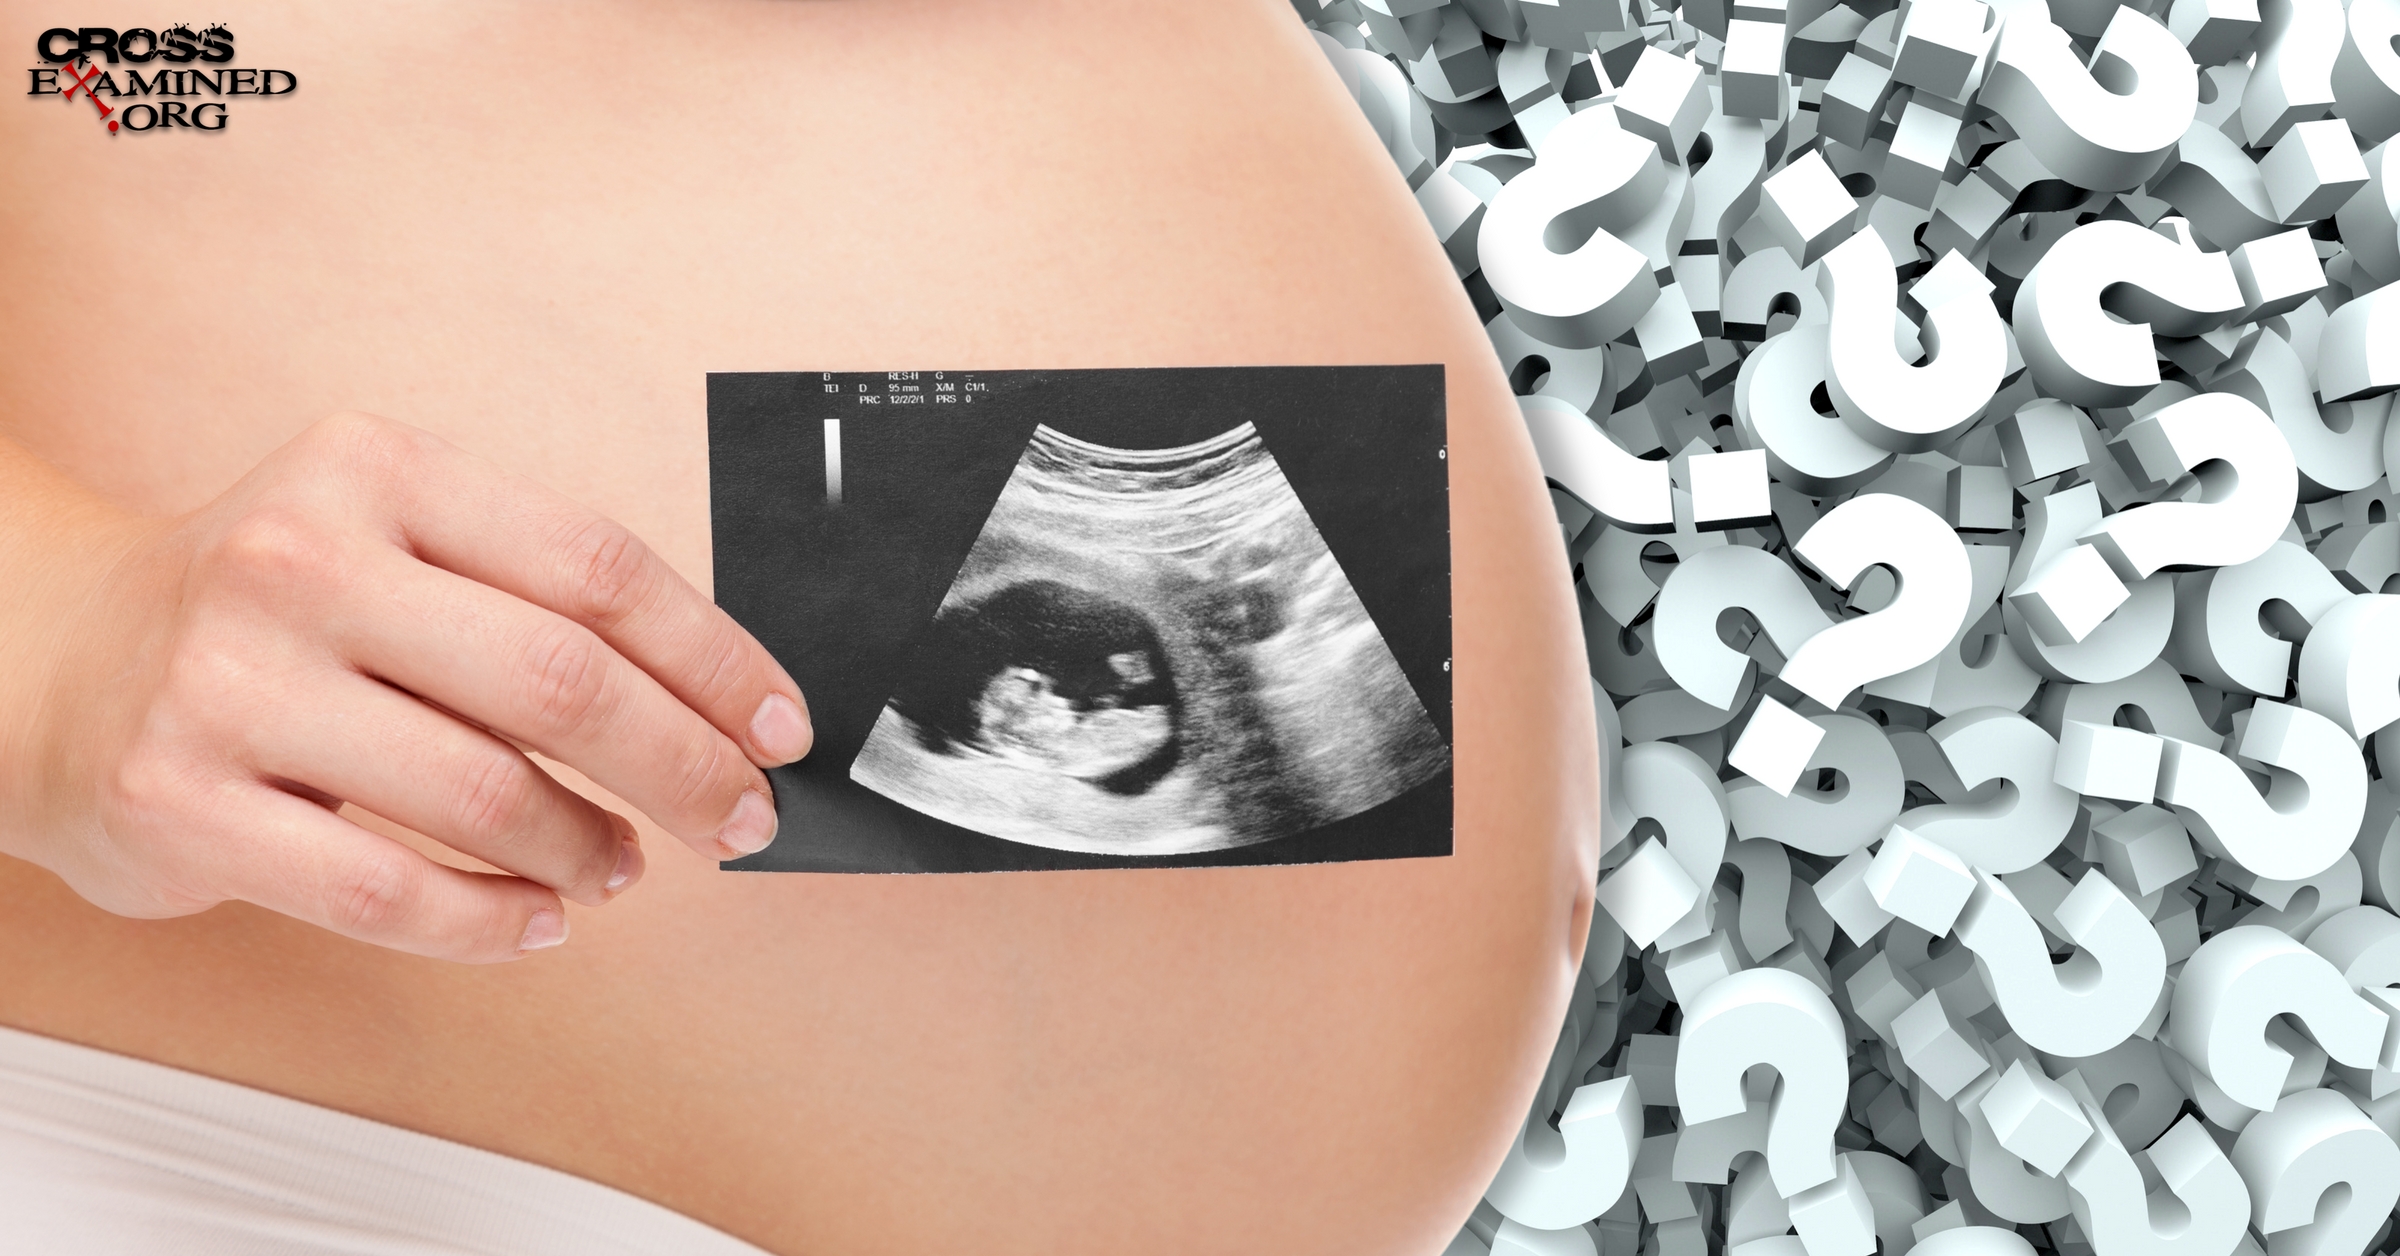 Unborn Abortion Life